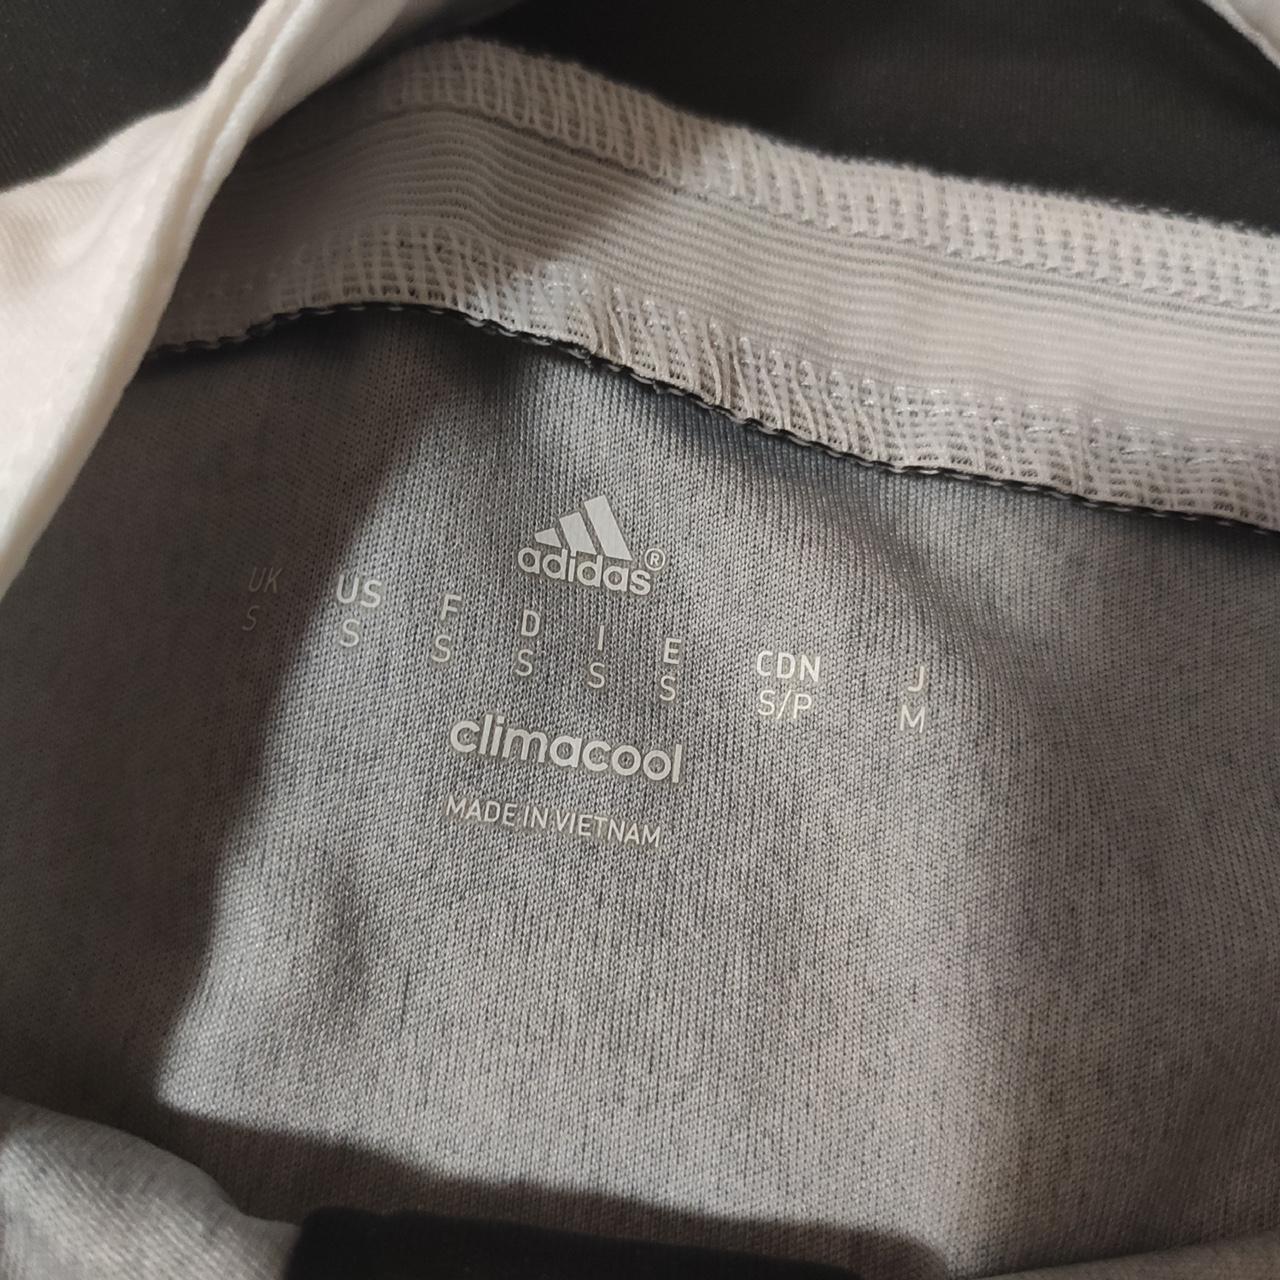 Adidas Men's White and Black Shirt | Depop